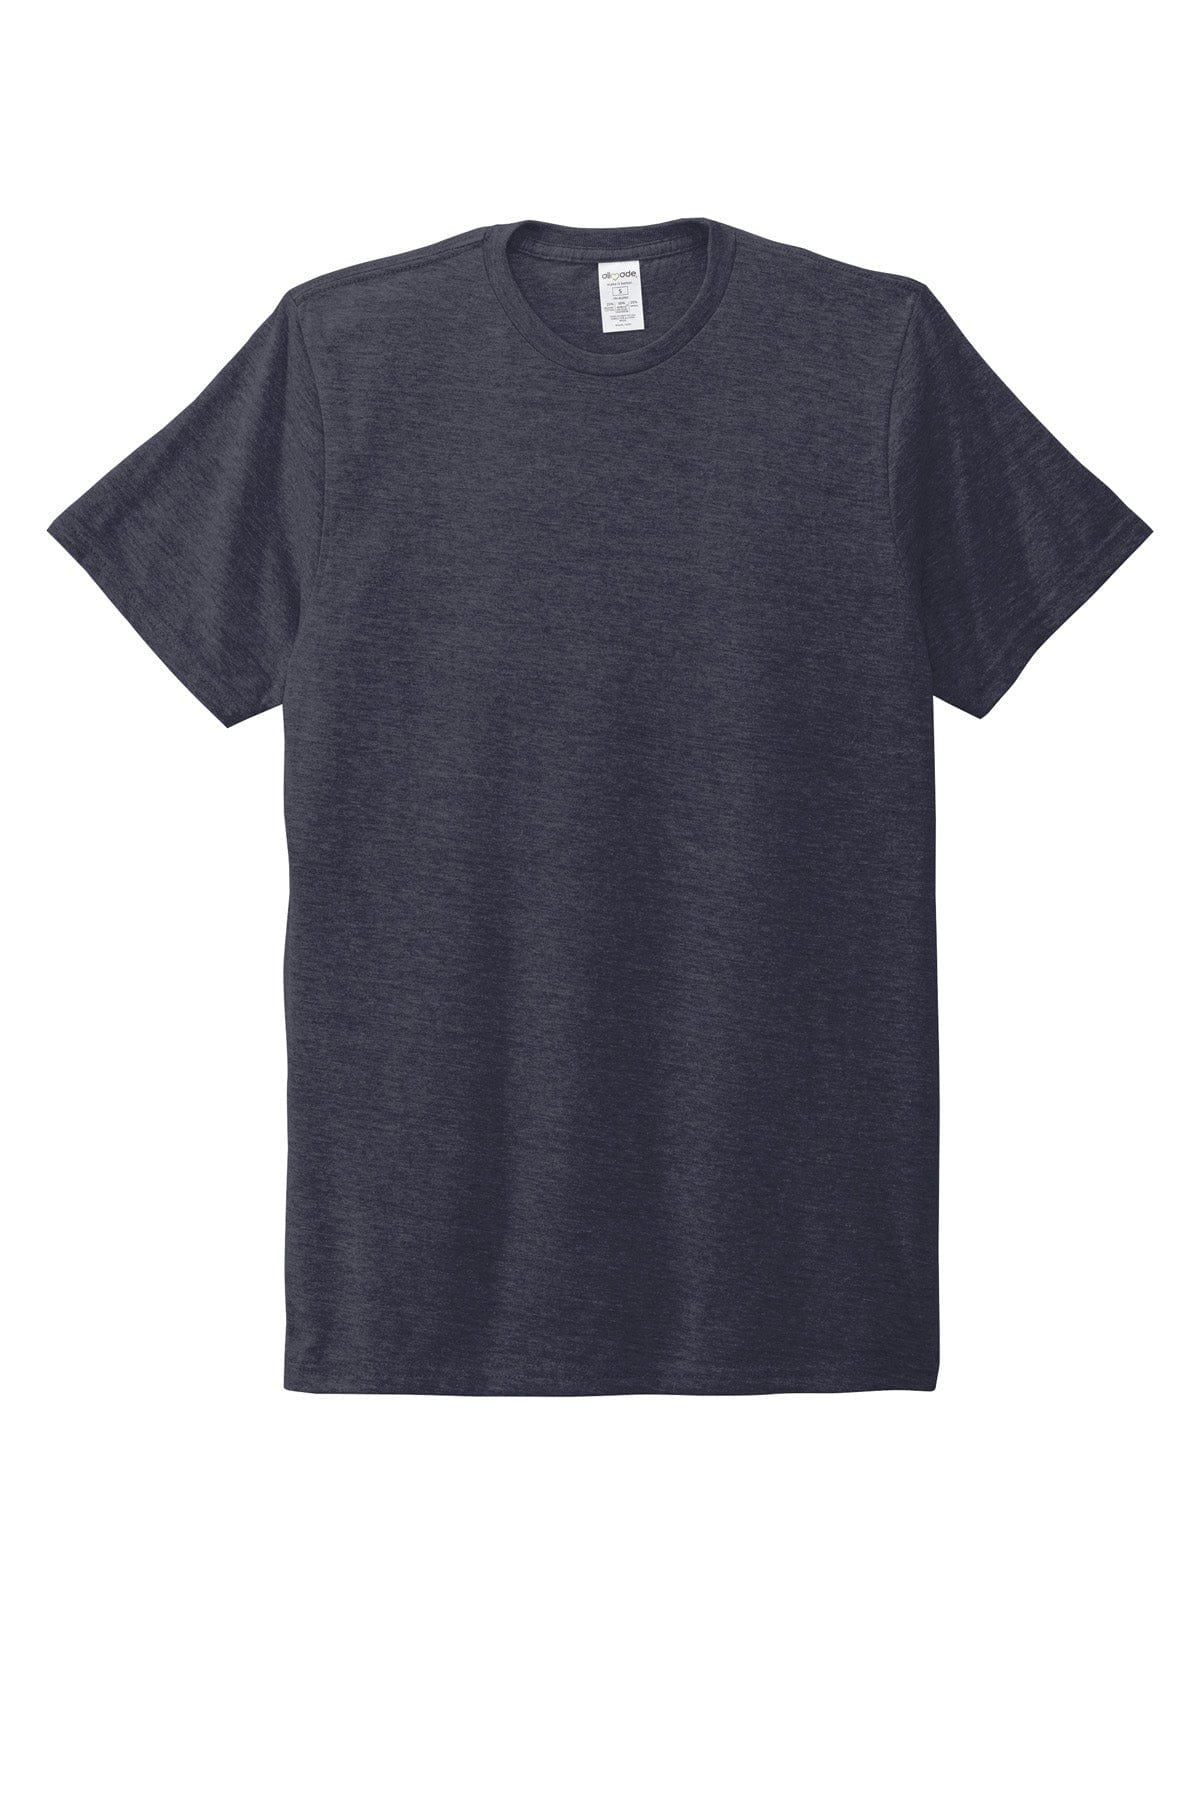 XS / Rebel Blue Custom Allmade Unisex Tri-Blend T-Shirt